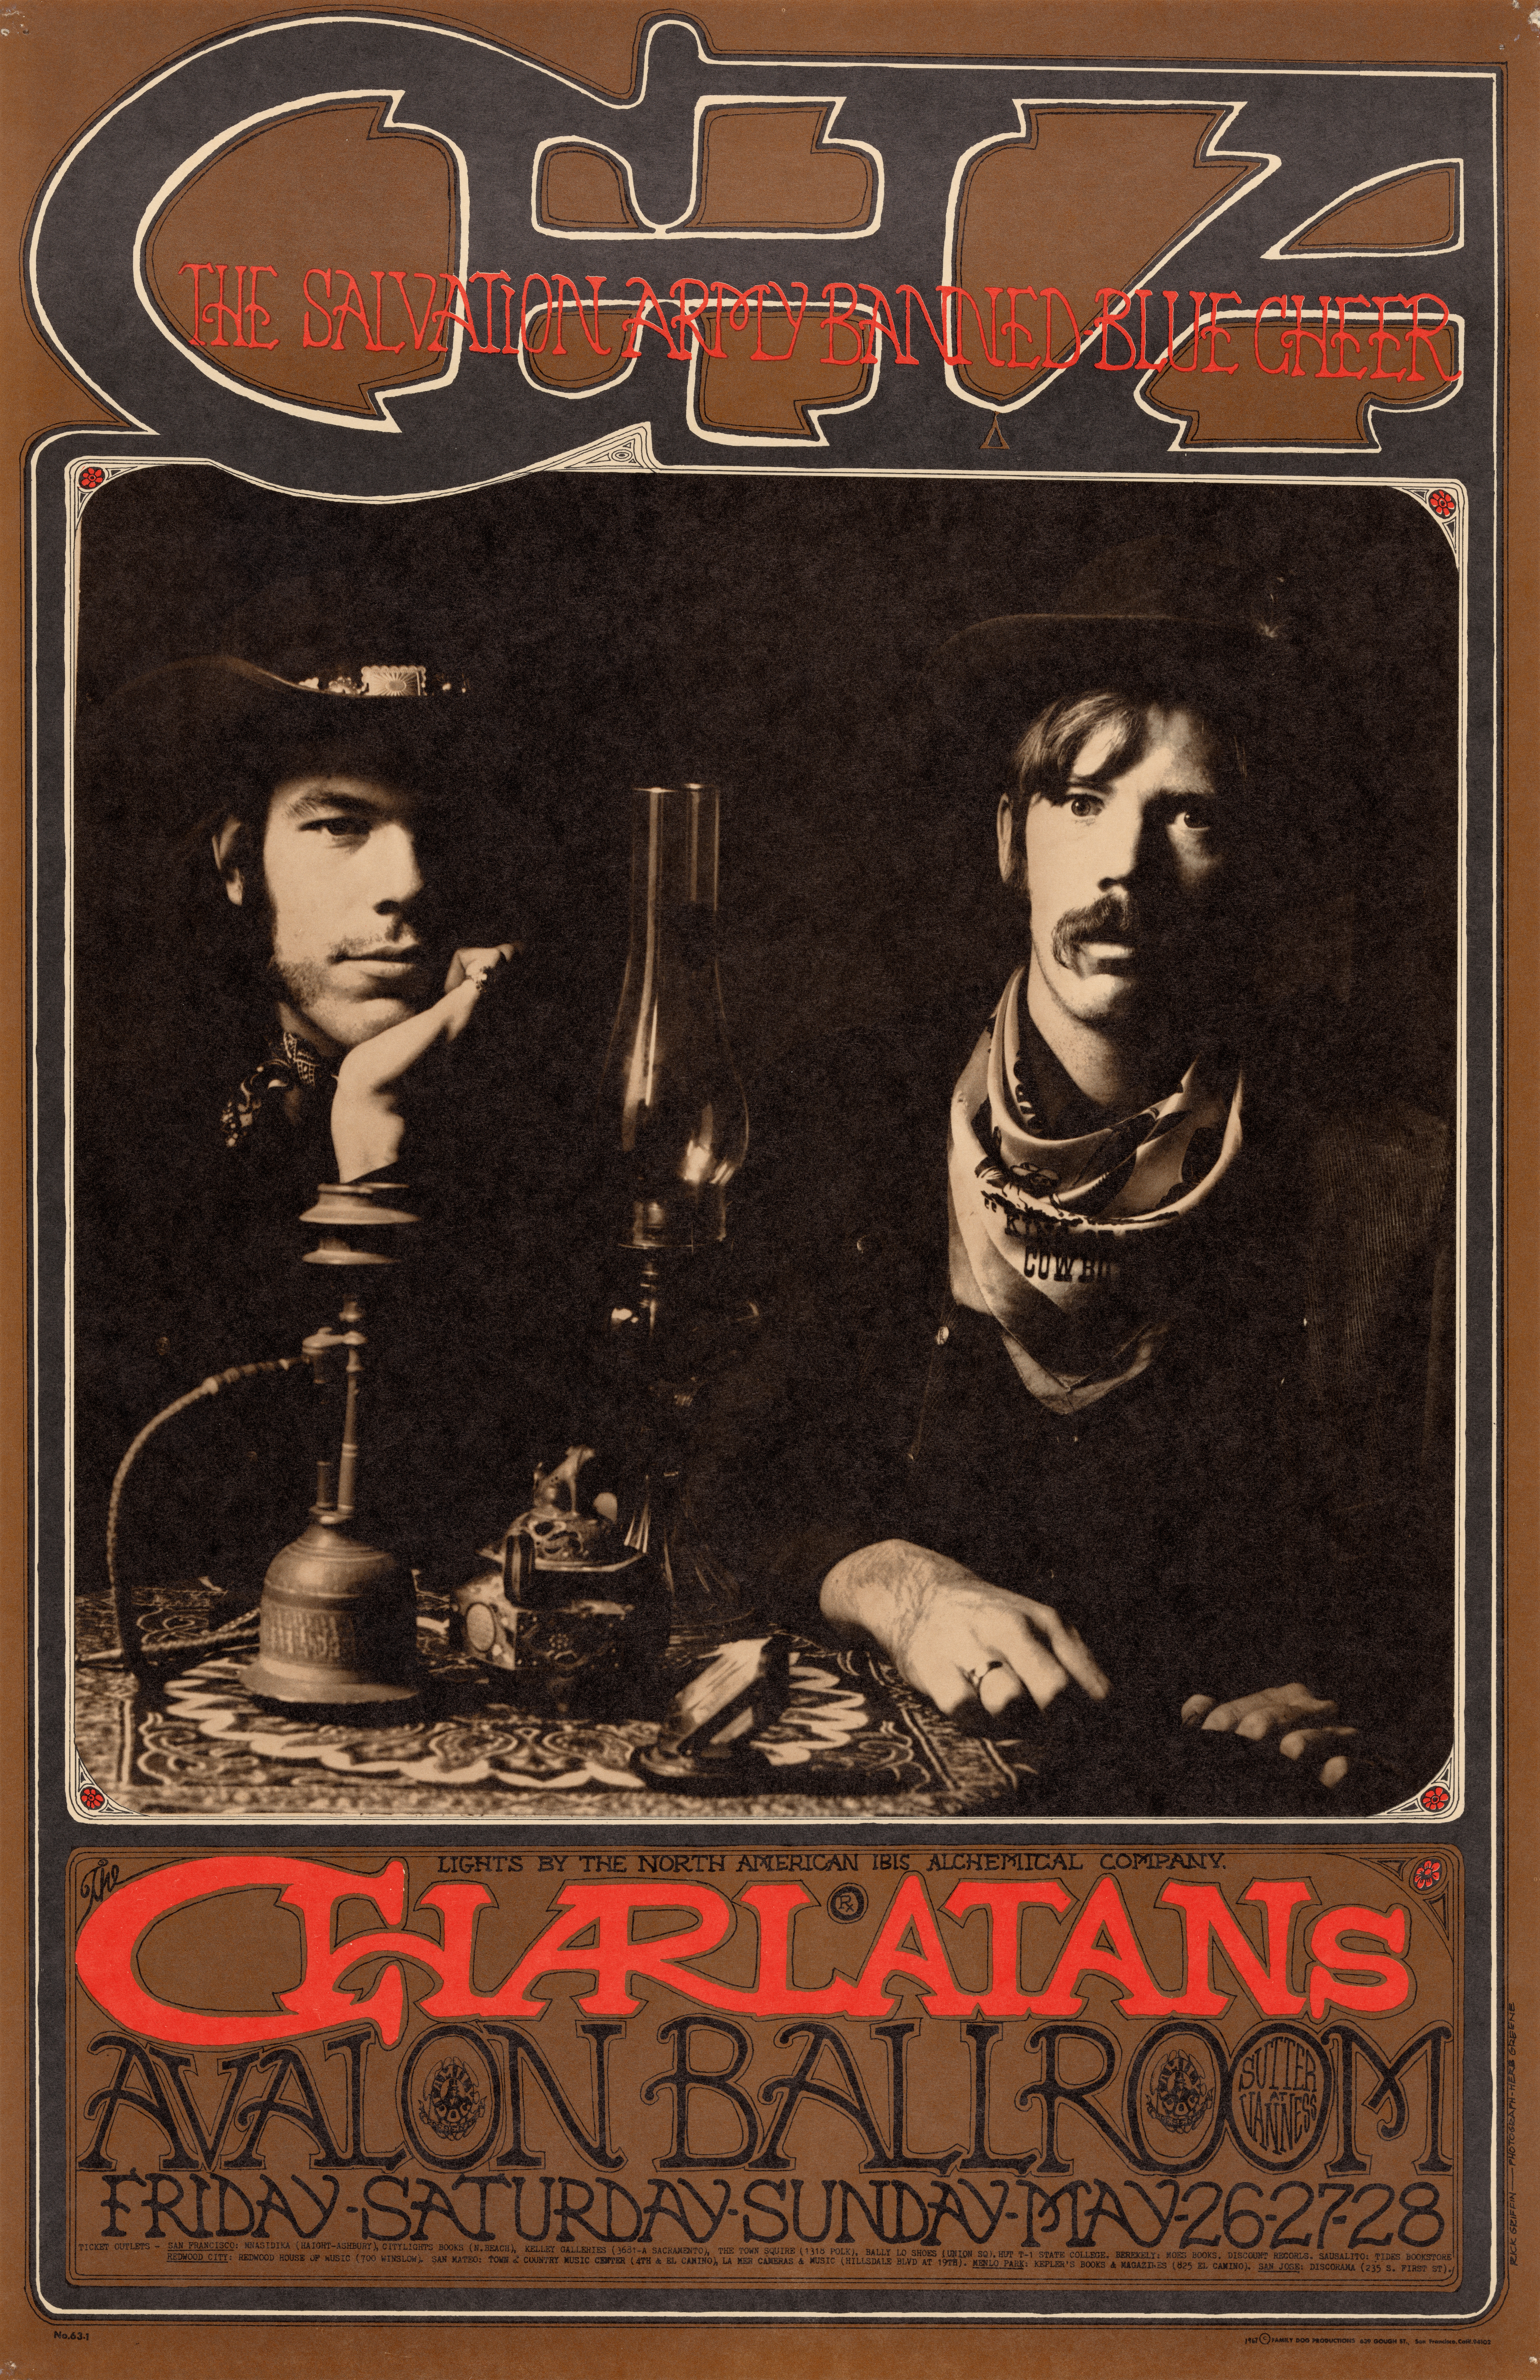 Charlatans, Blue Cheer; Avalon Ballroom; May 26-28, 1967